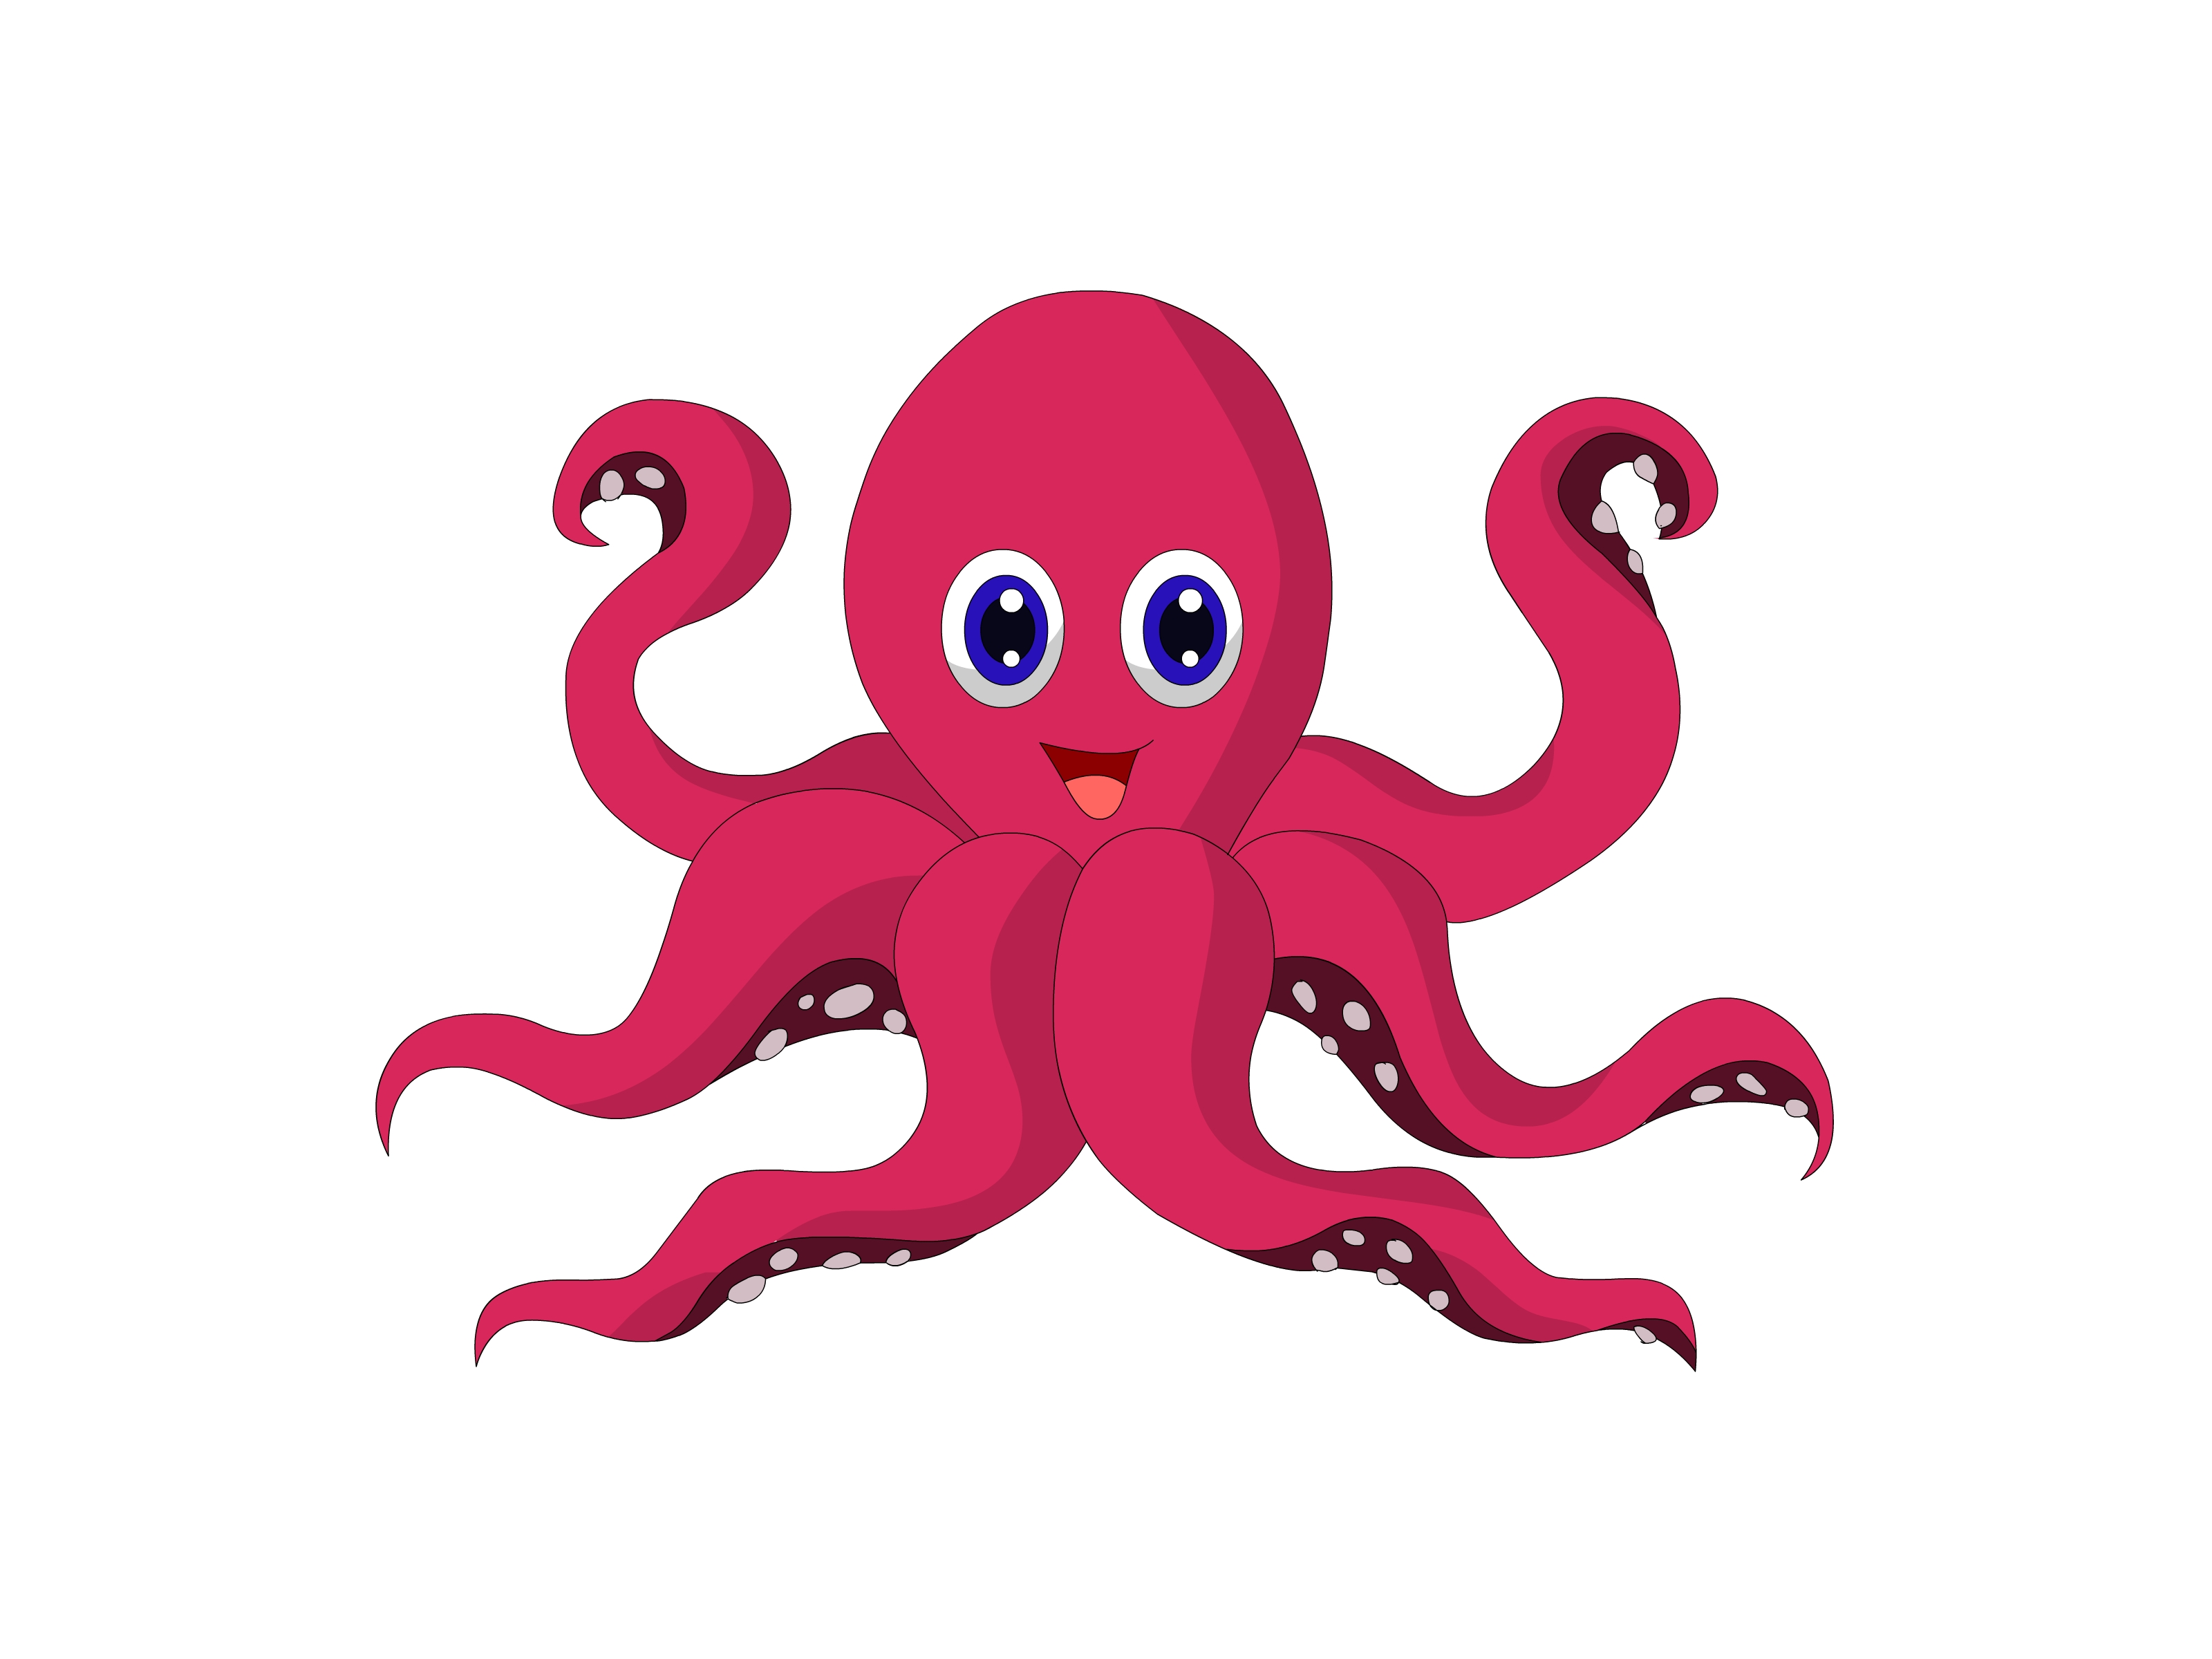 Octopus Cartoon Images, Cute octopus cartoon Royalty Free Vector Image ...